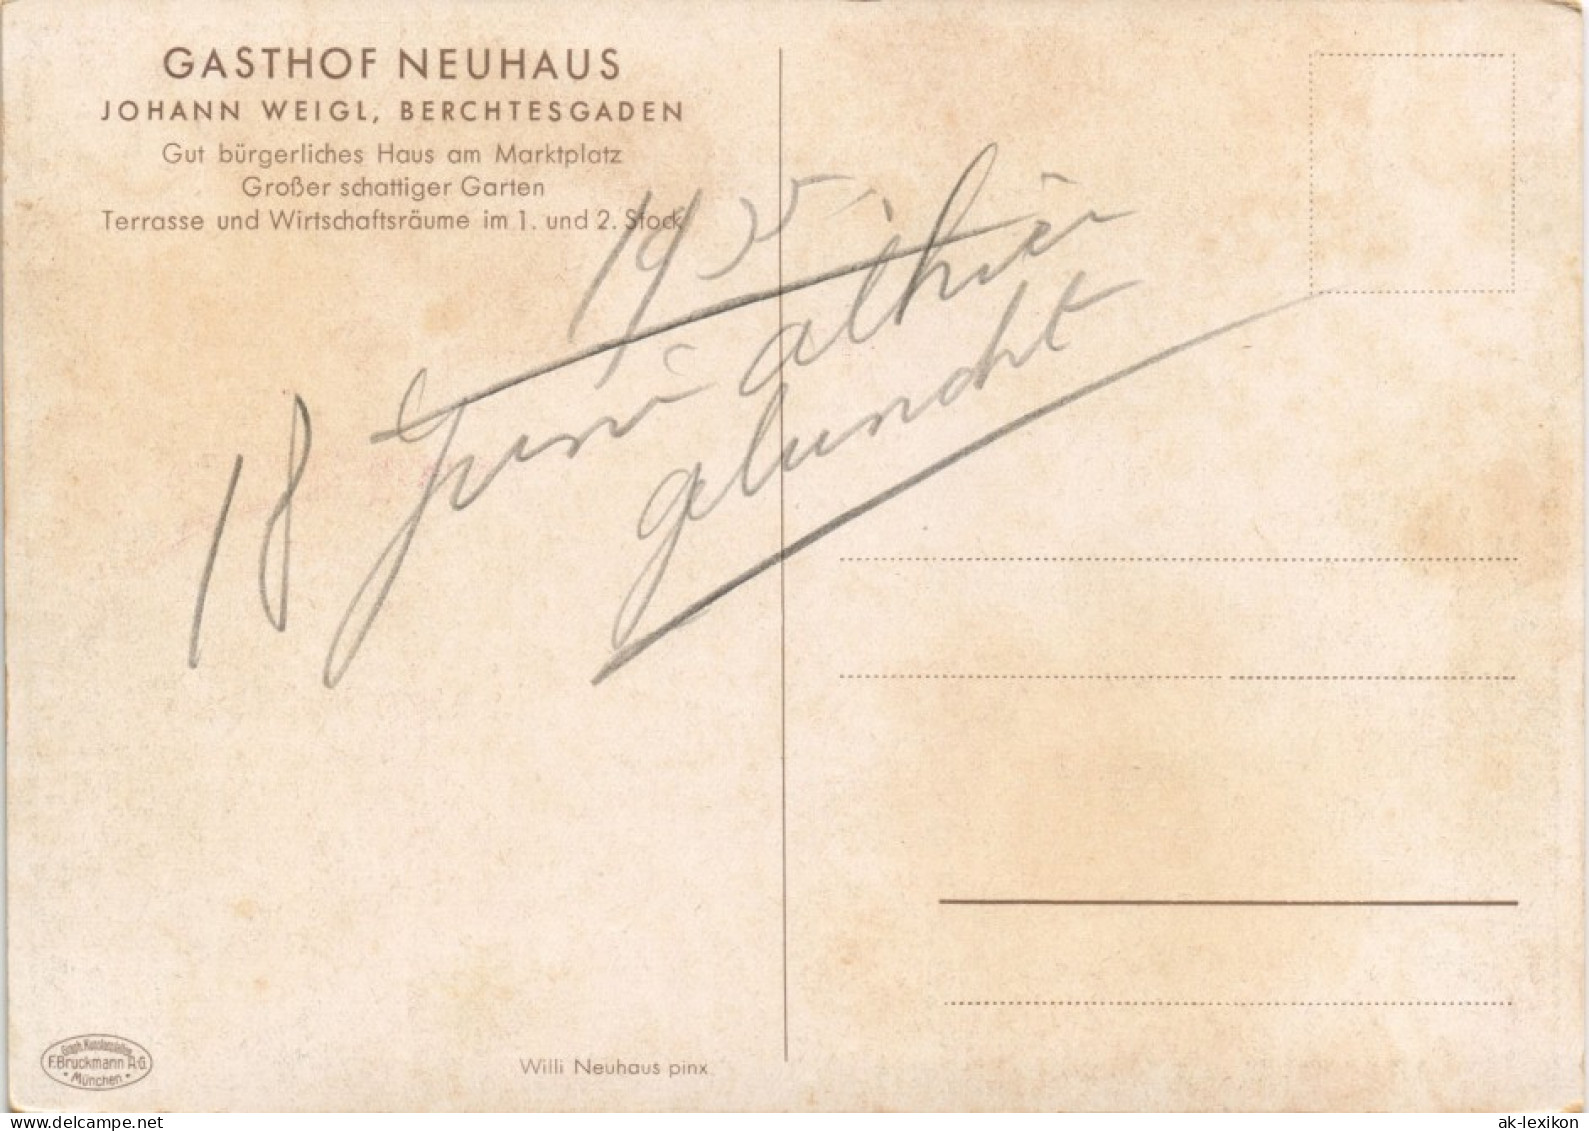 Berchtesgaden GASTHOF NEUHAUS Nach Künstler Willi Neuhaus Pinx. 1930 - Berchtesgaden